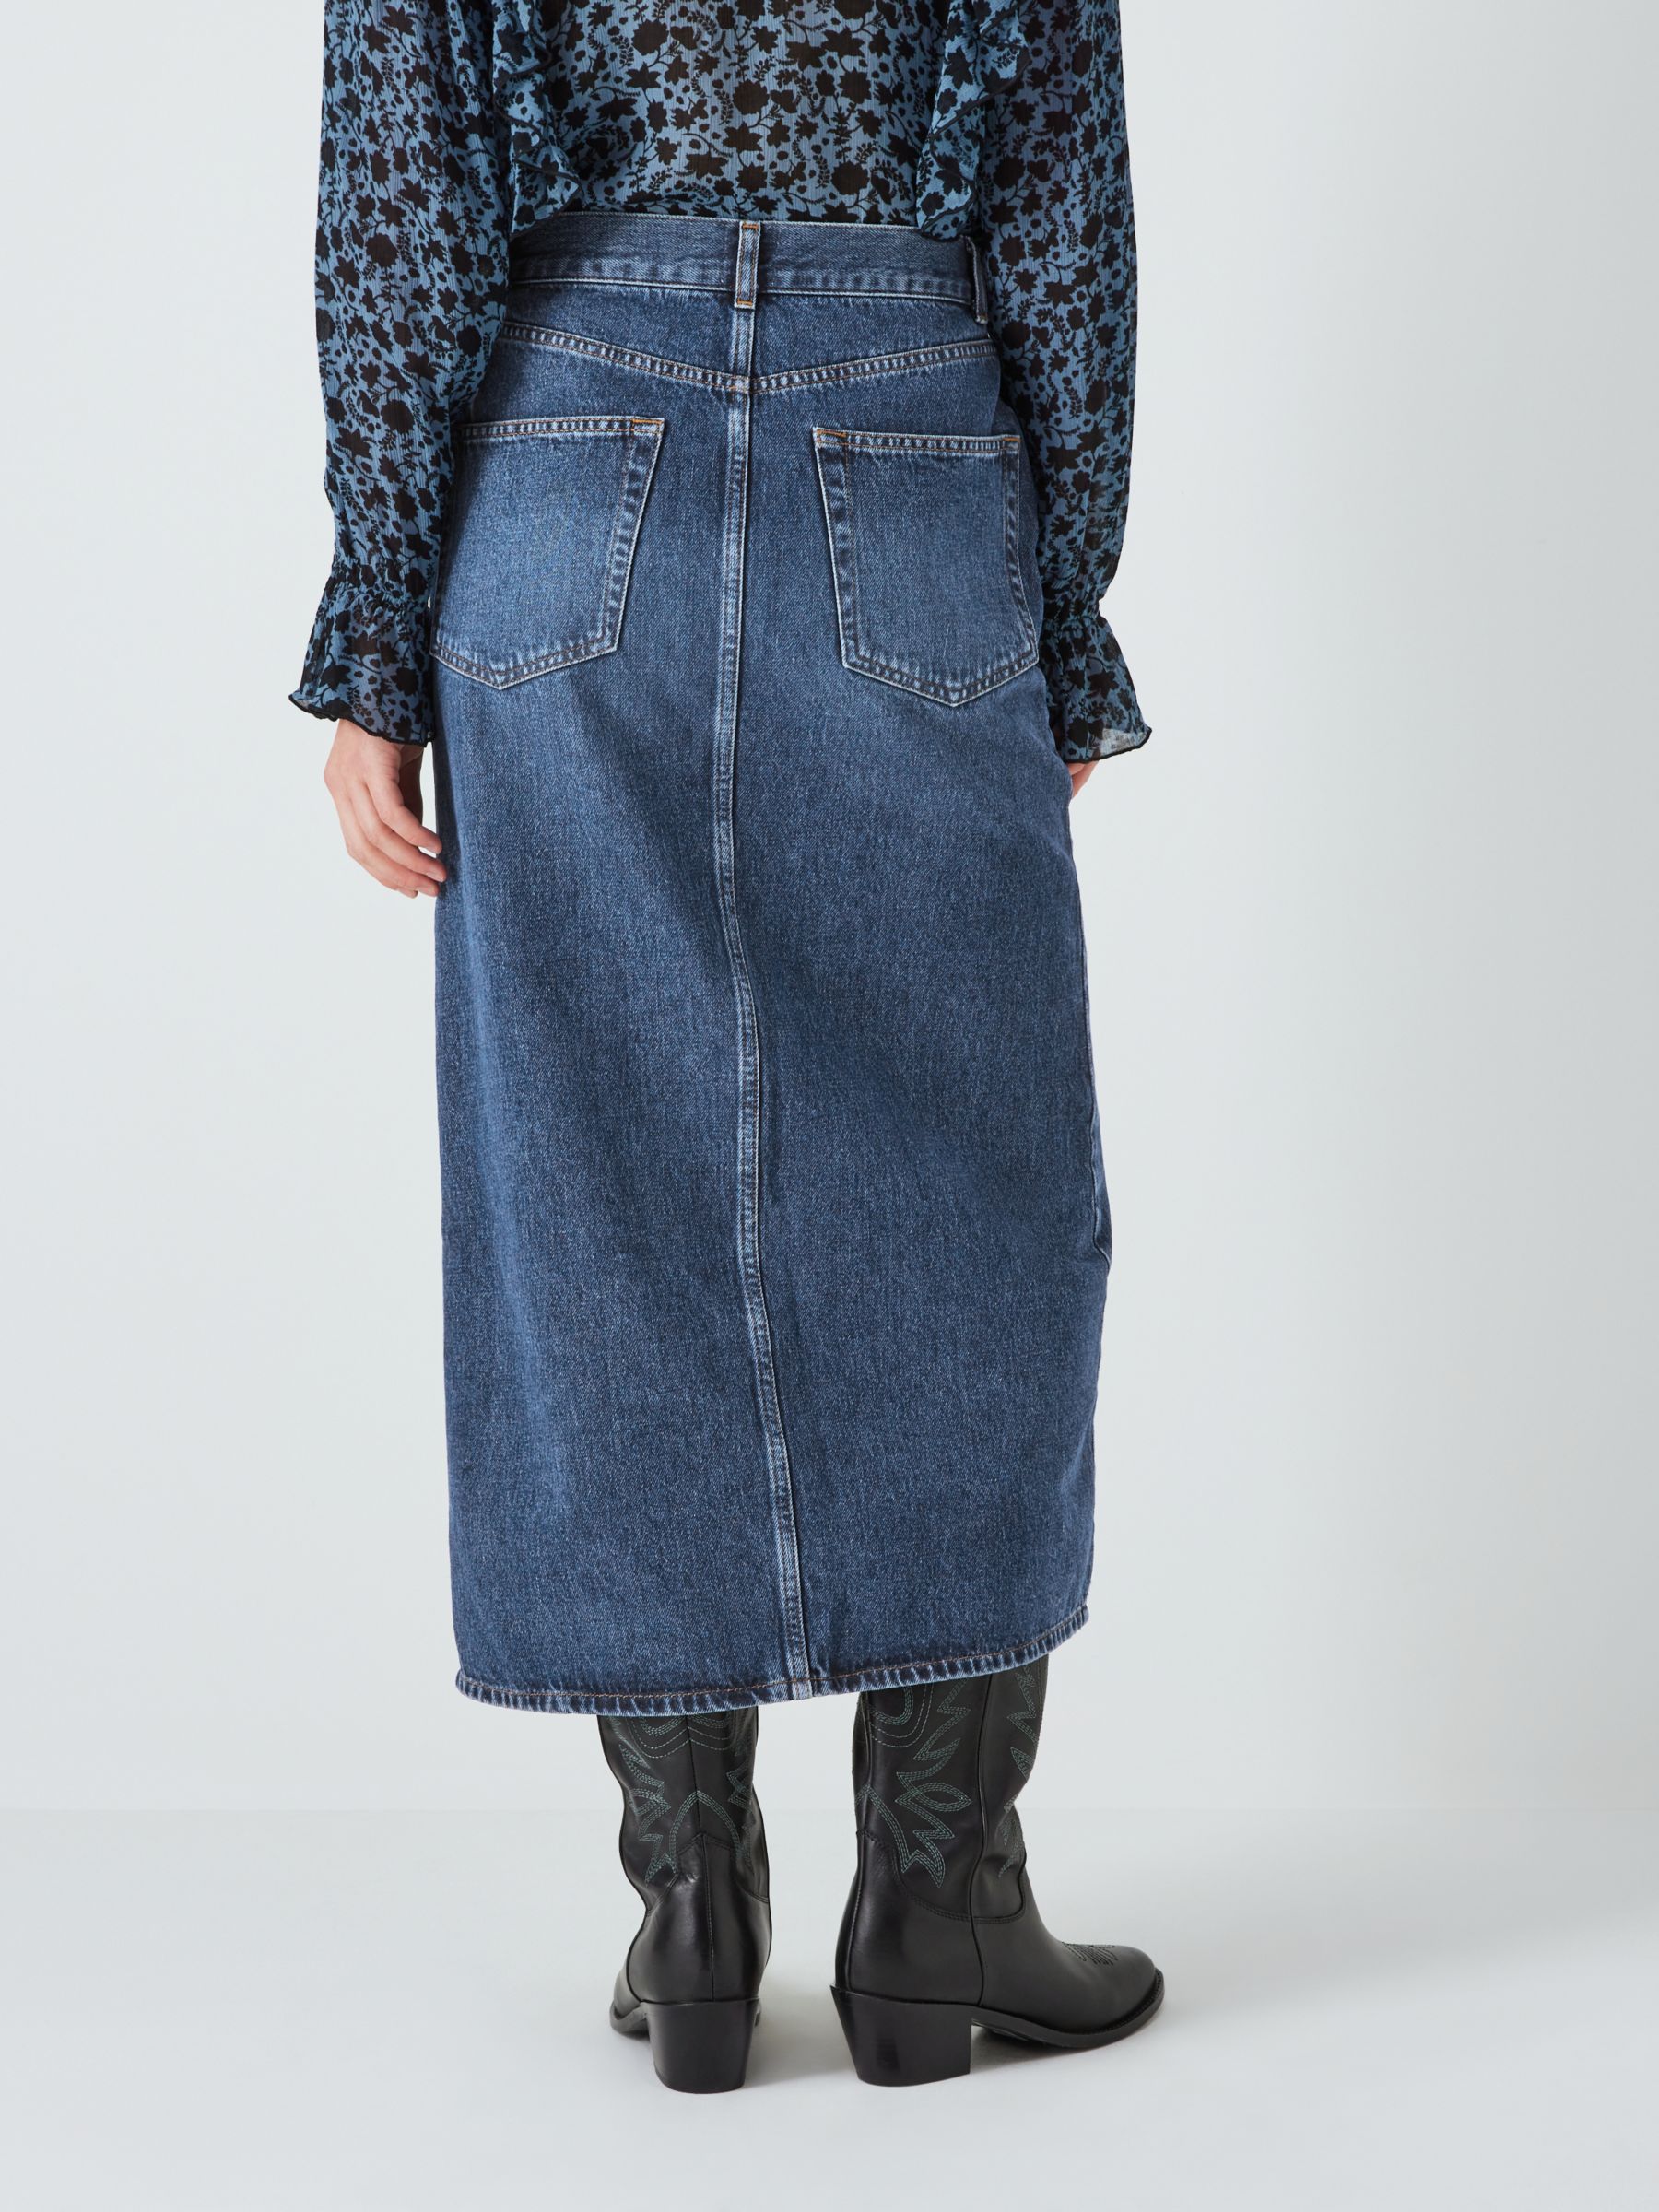 AND/OR Mimi Denim Midi Skirt, Dark Blue Wash, 8